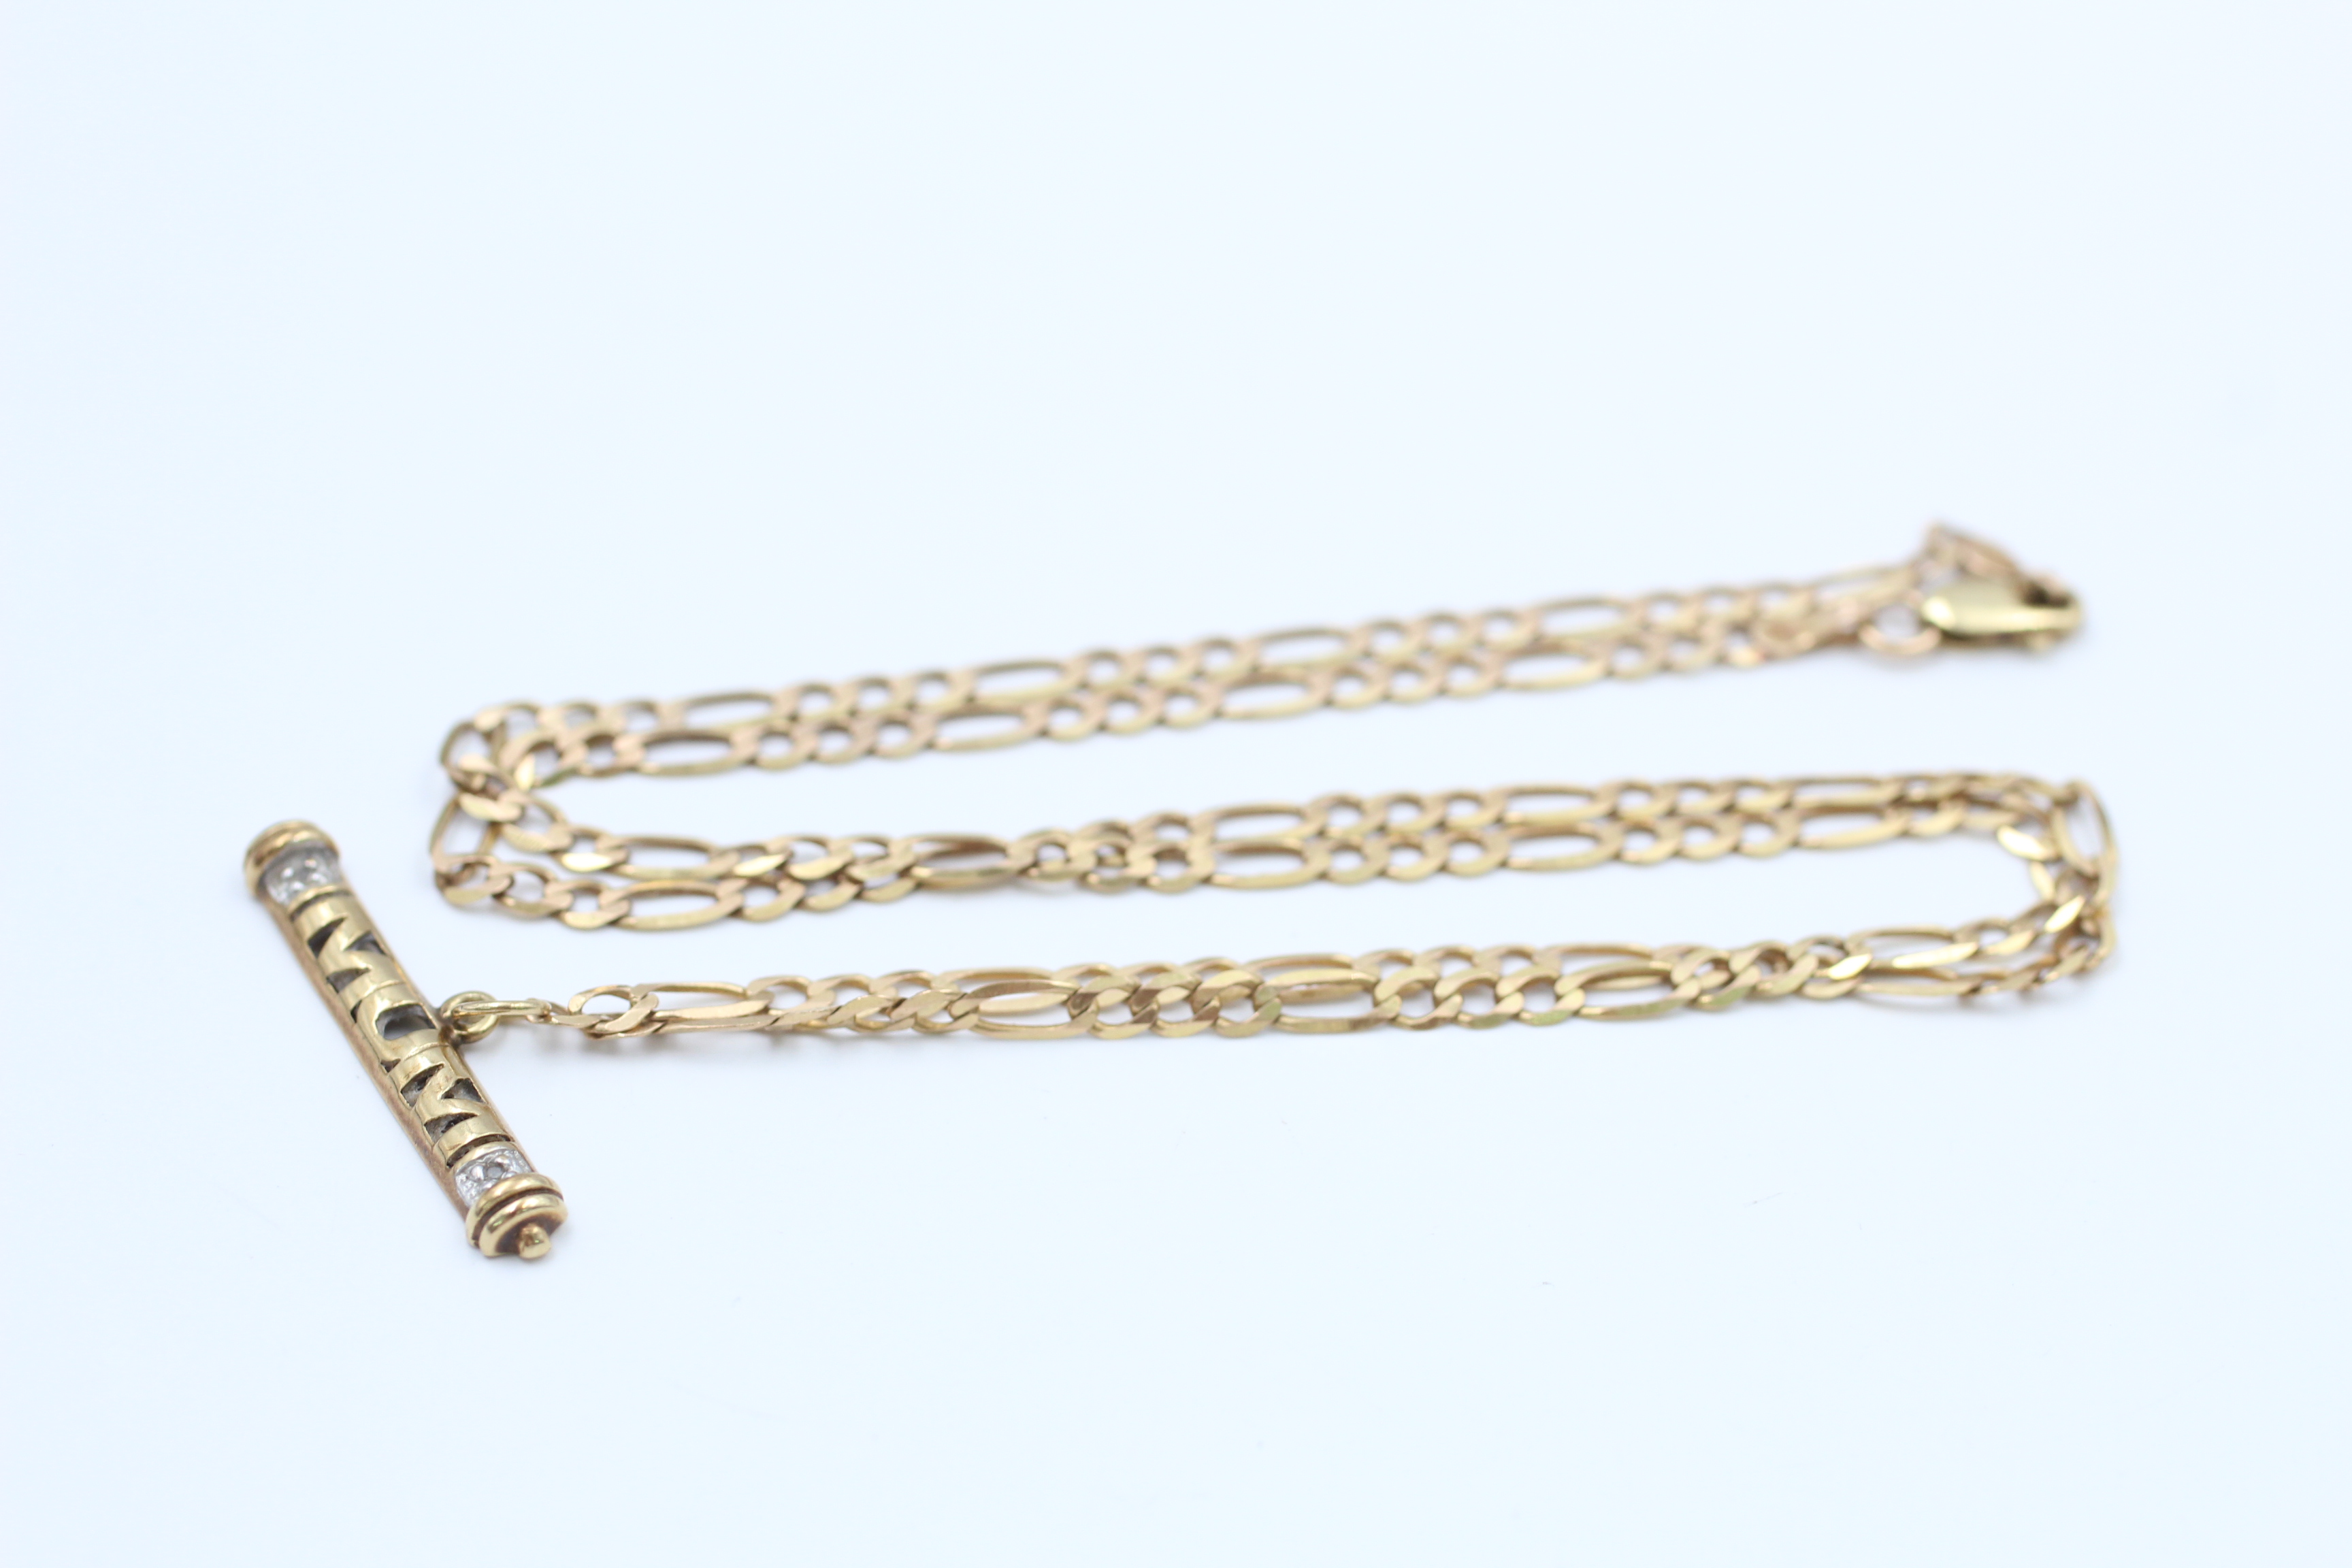 9ct gold "mum" t bar pendant necklace (4.7g)